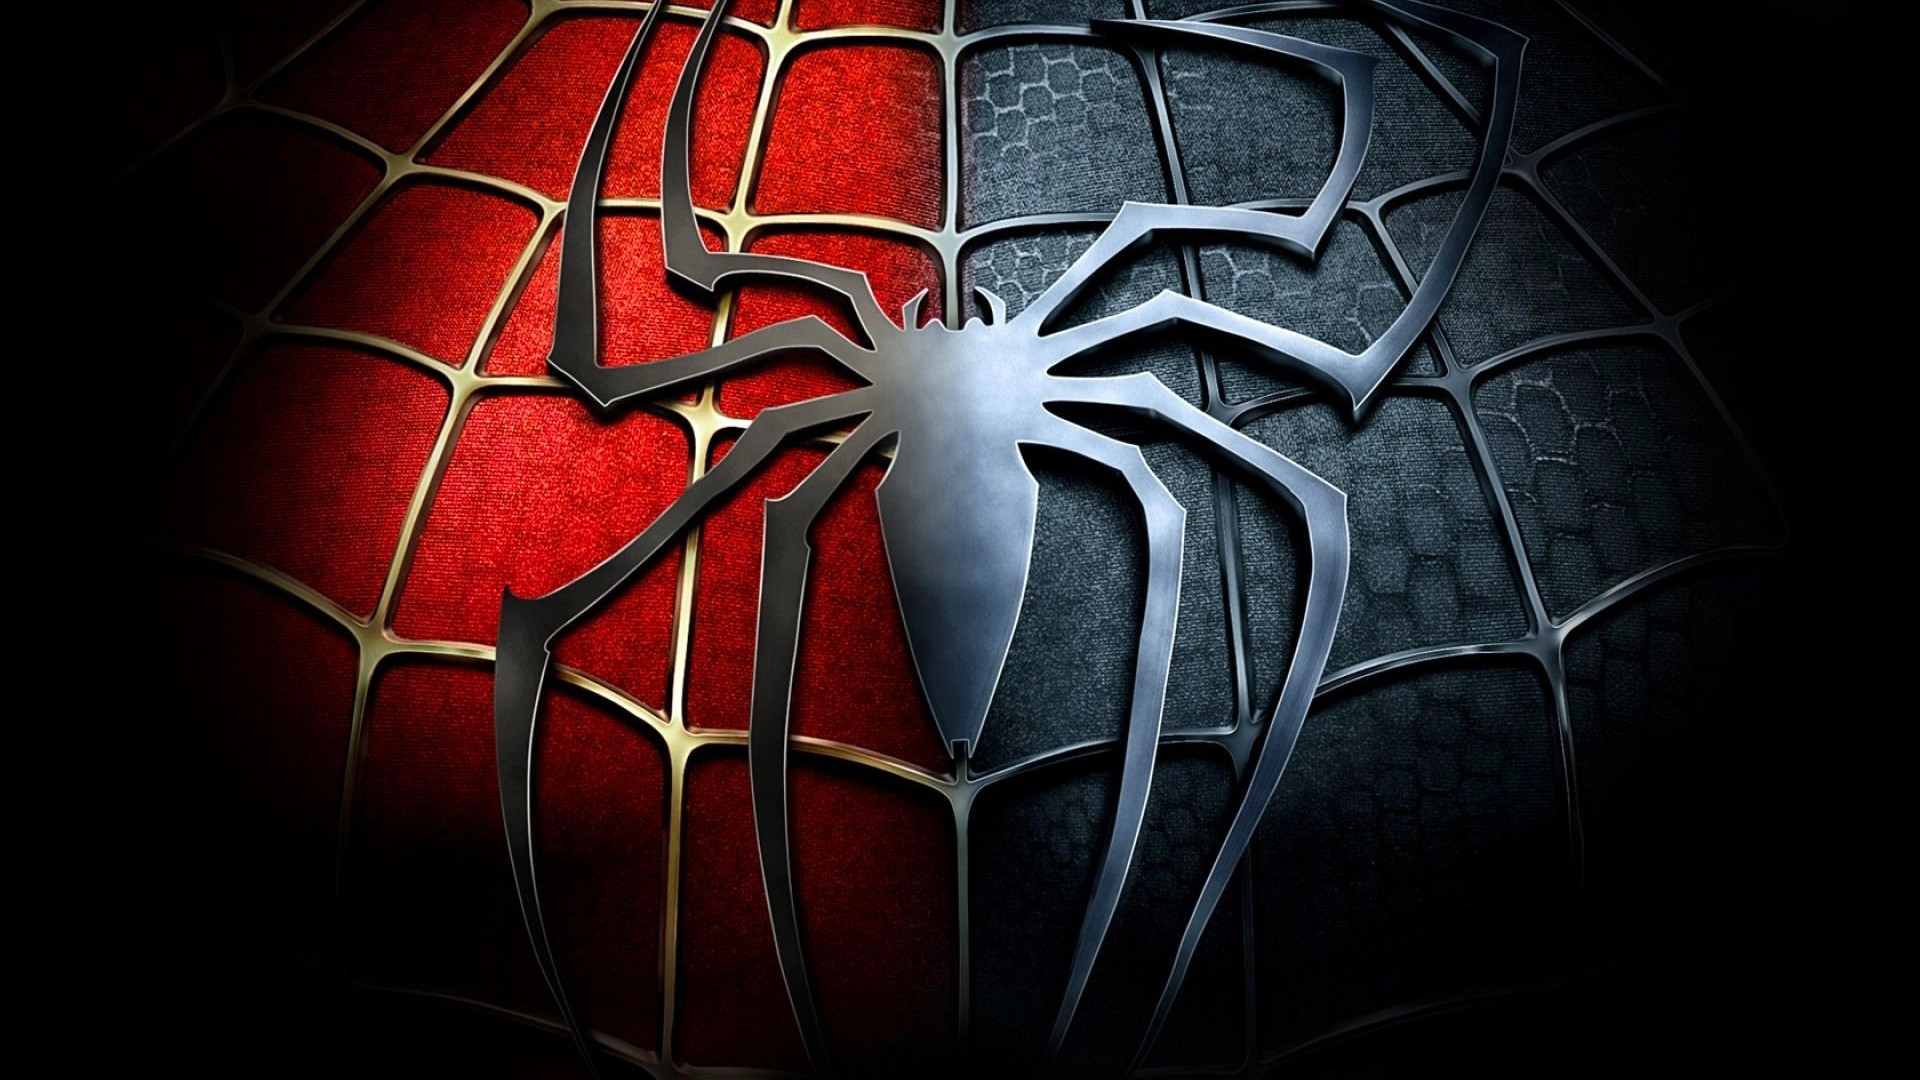 Spider-Man Logo 1920x1080 (1080p) - Wallpaper - HD Wallpapers